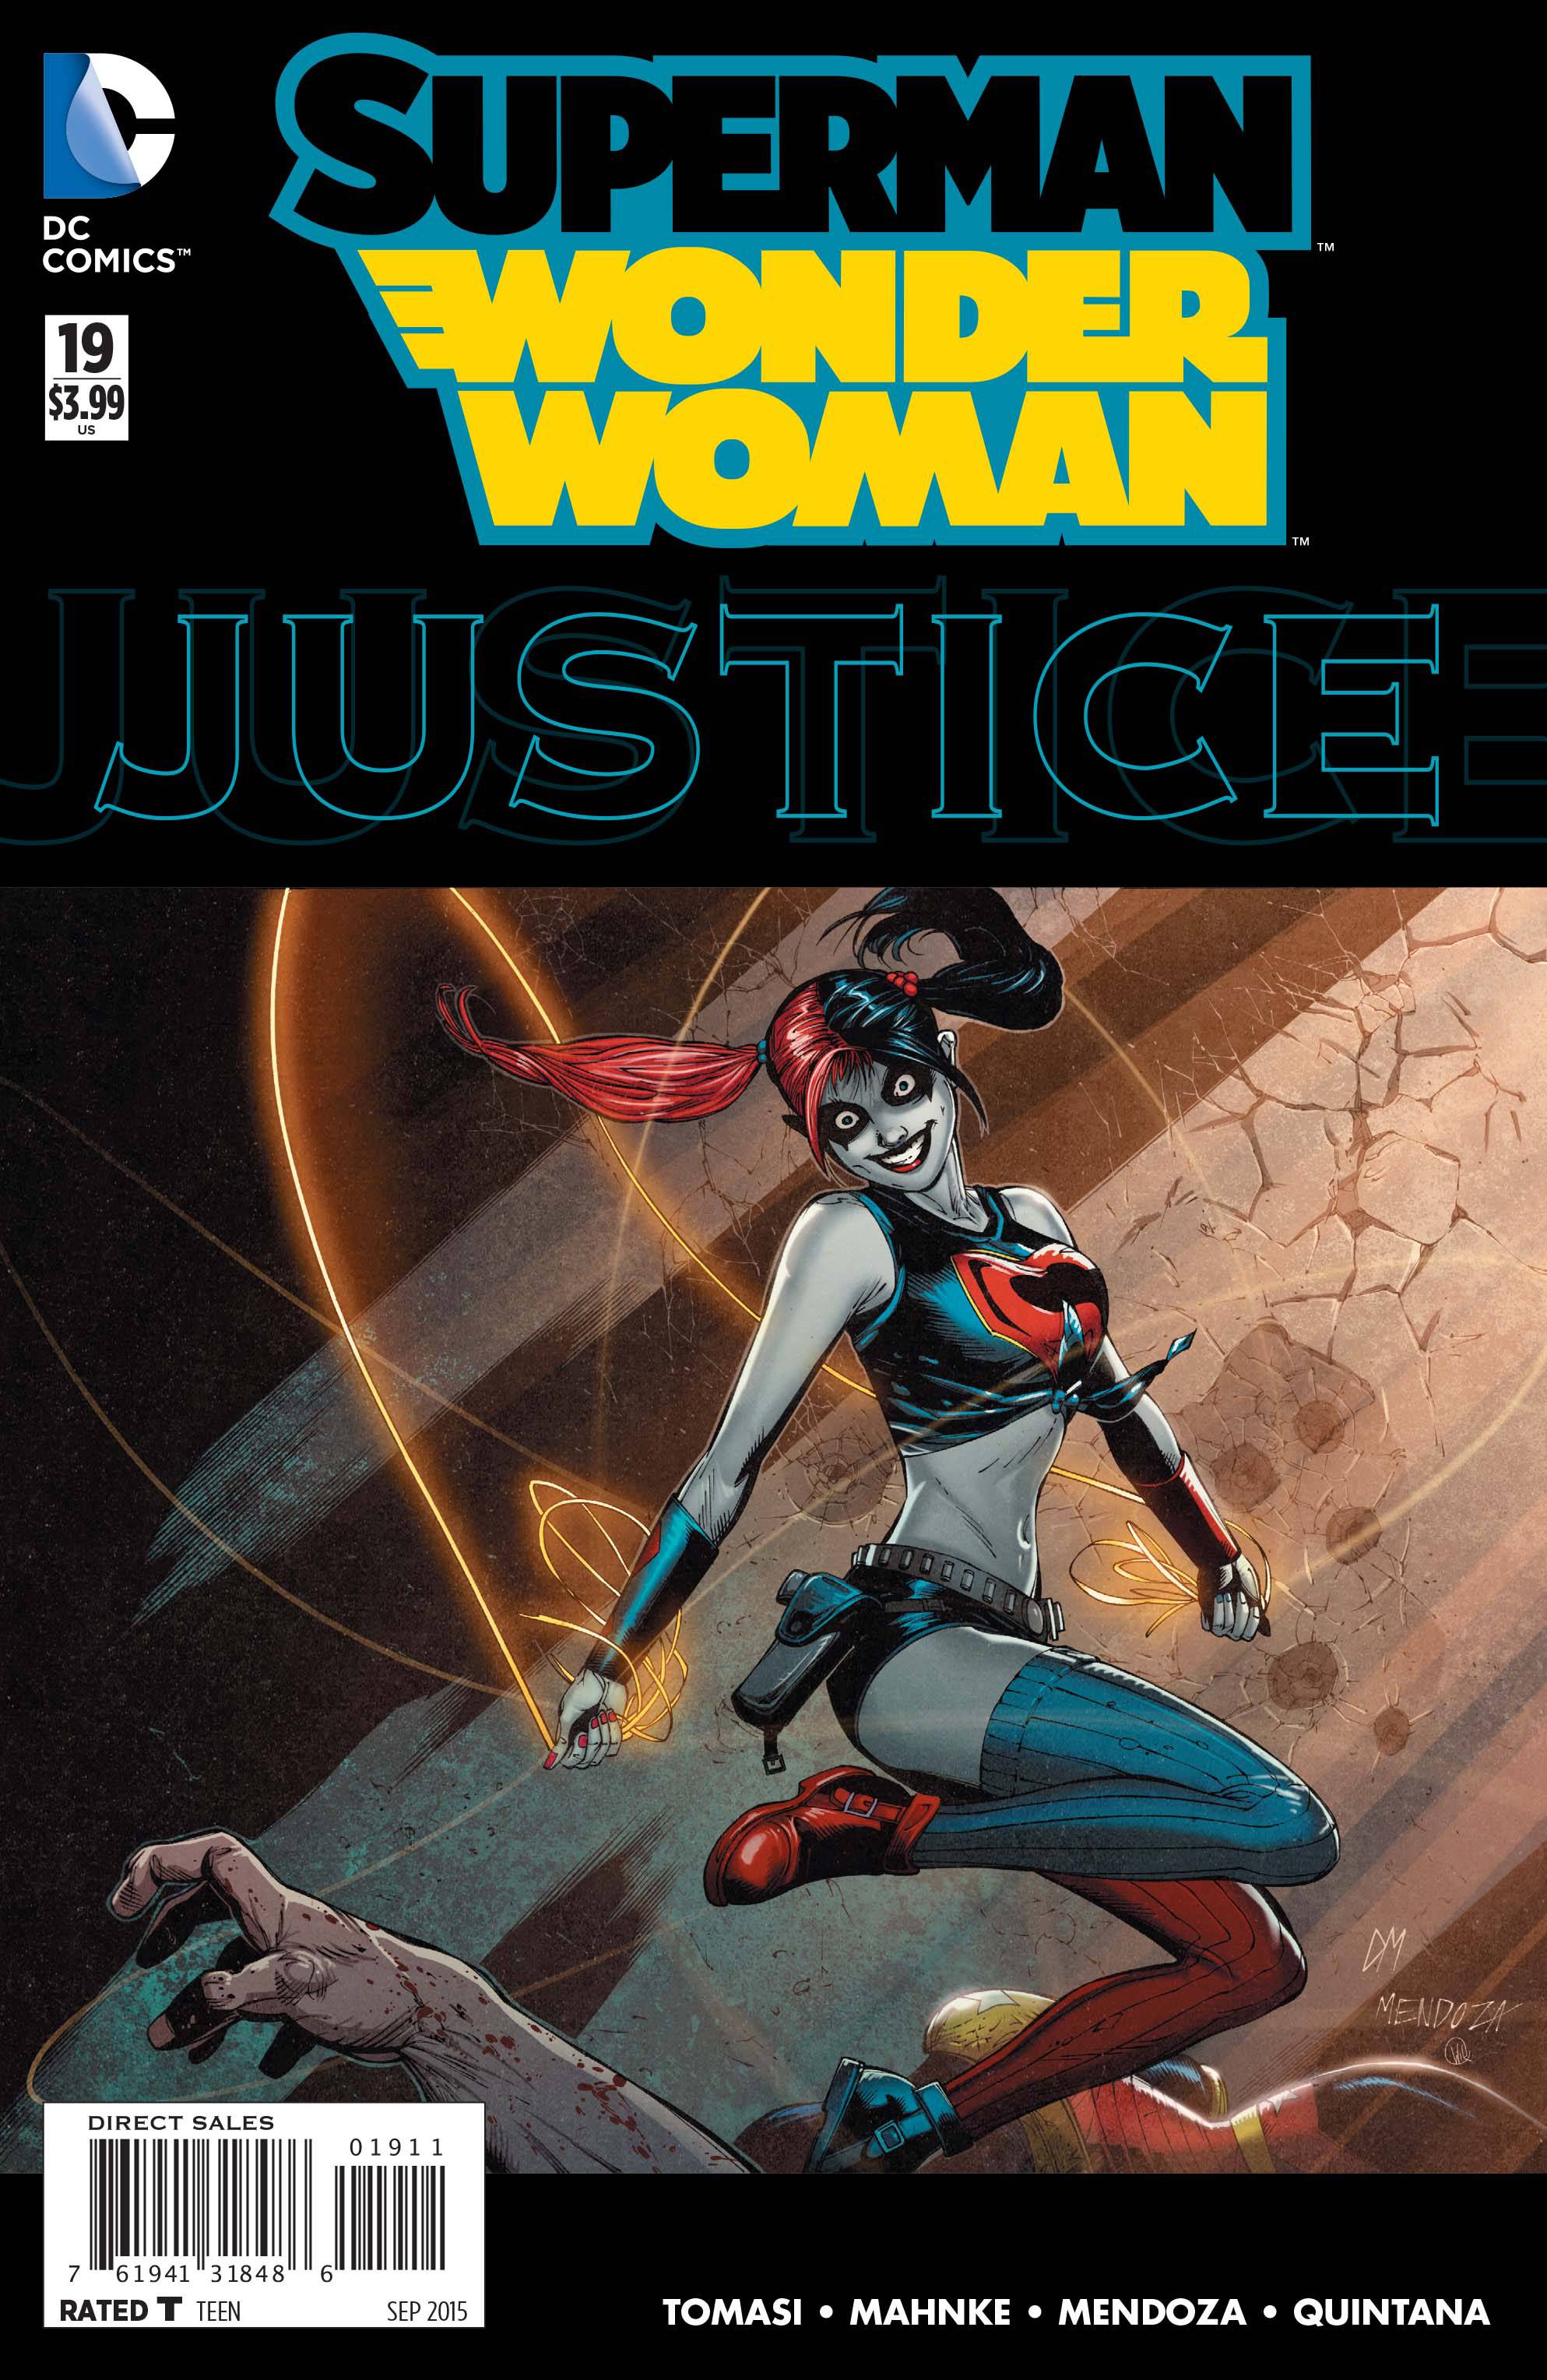 Superman Wonder Woman #19 (2013)